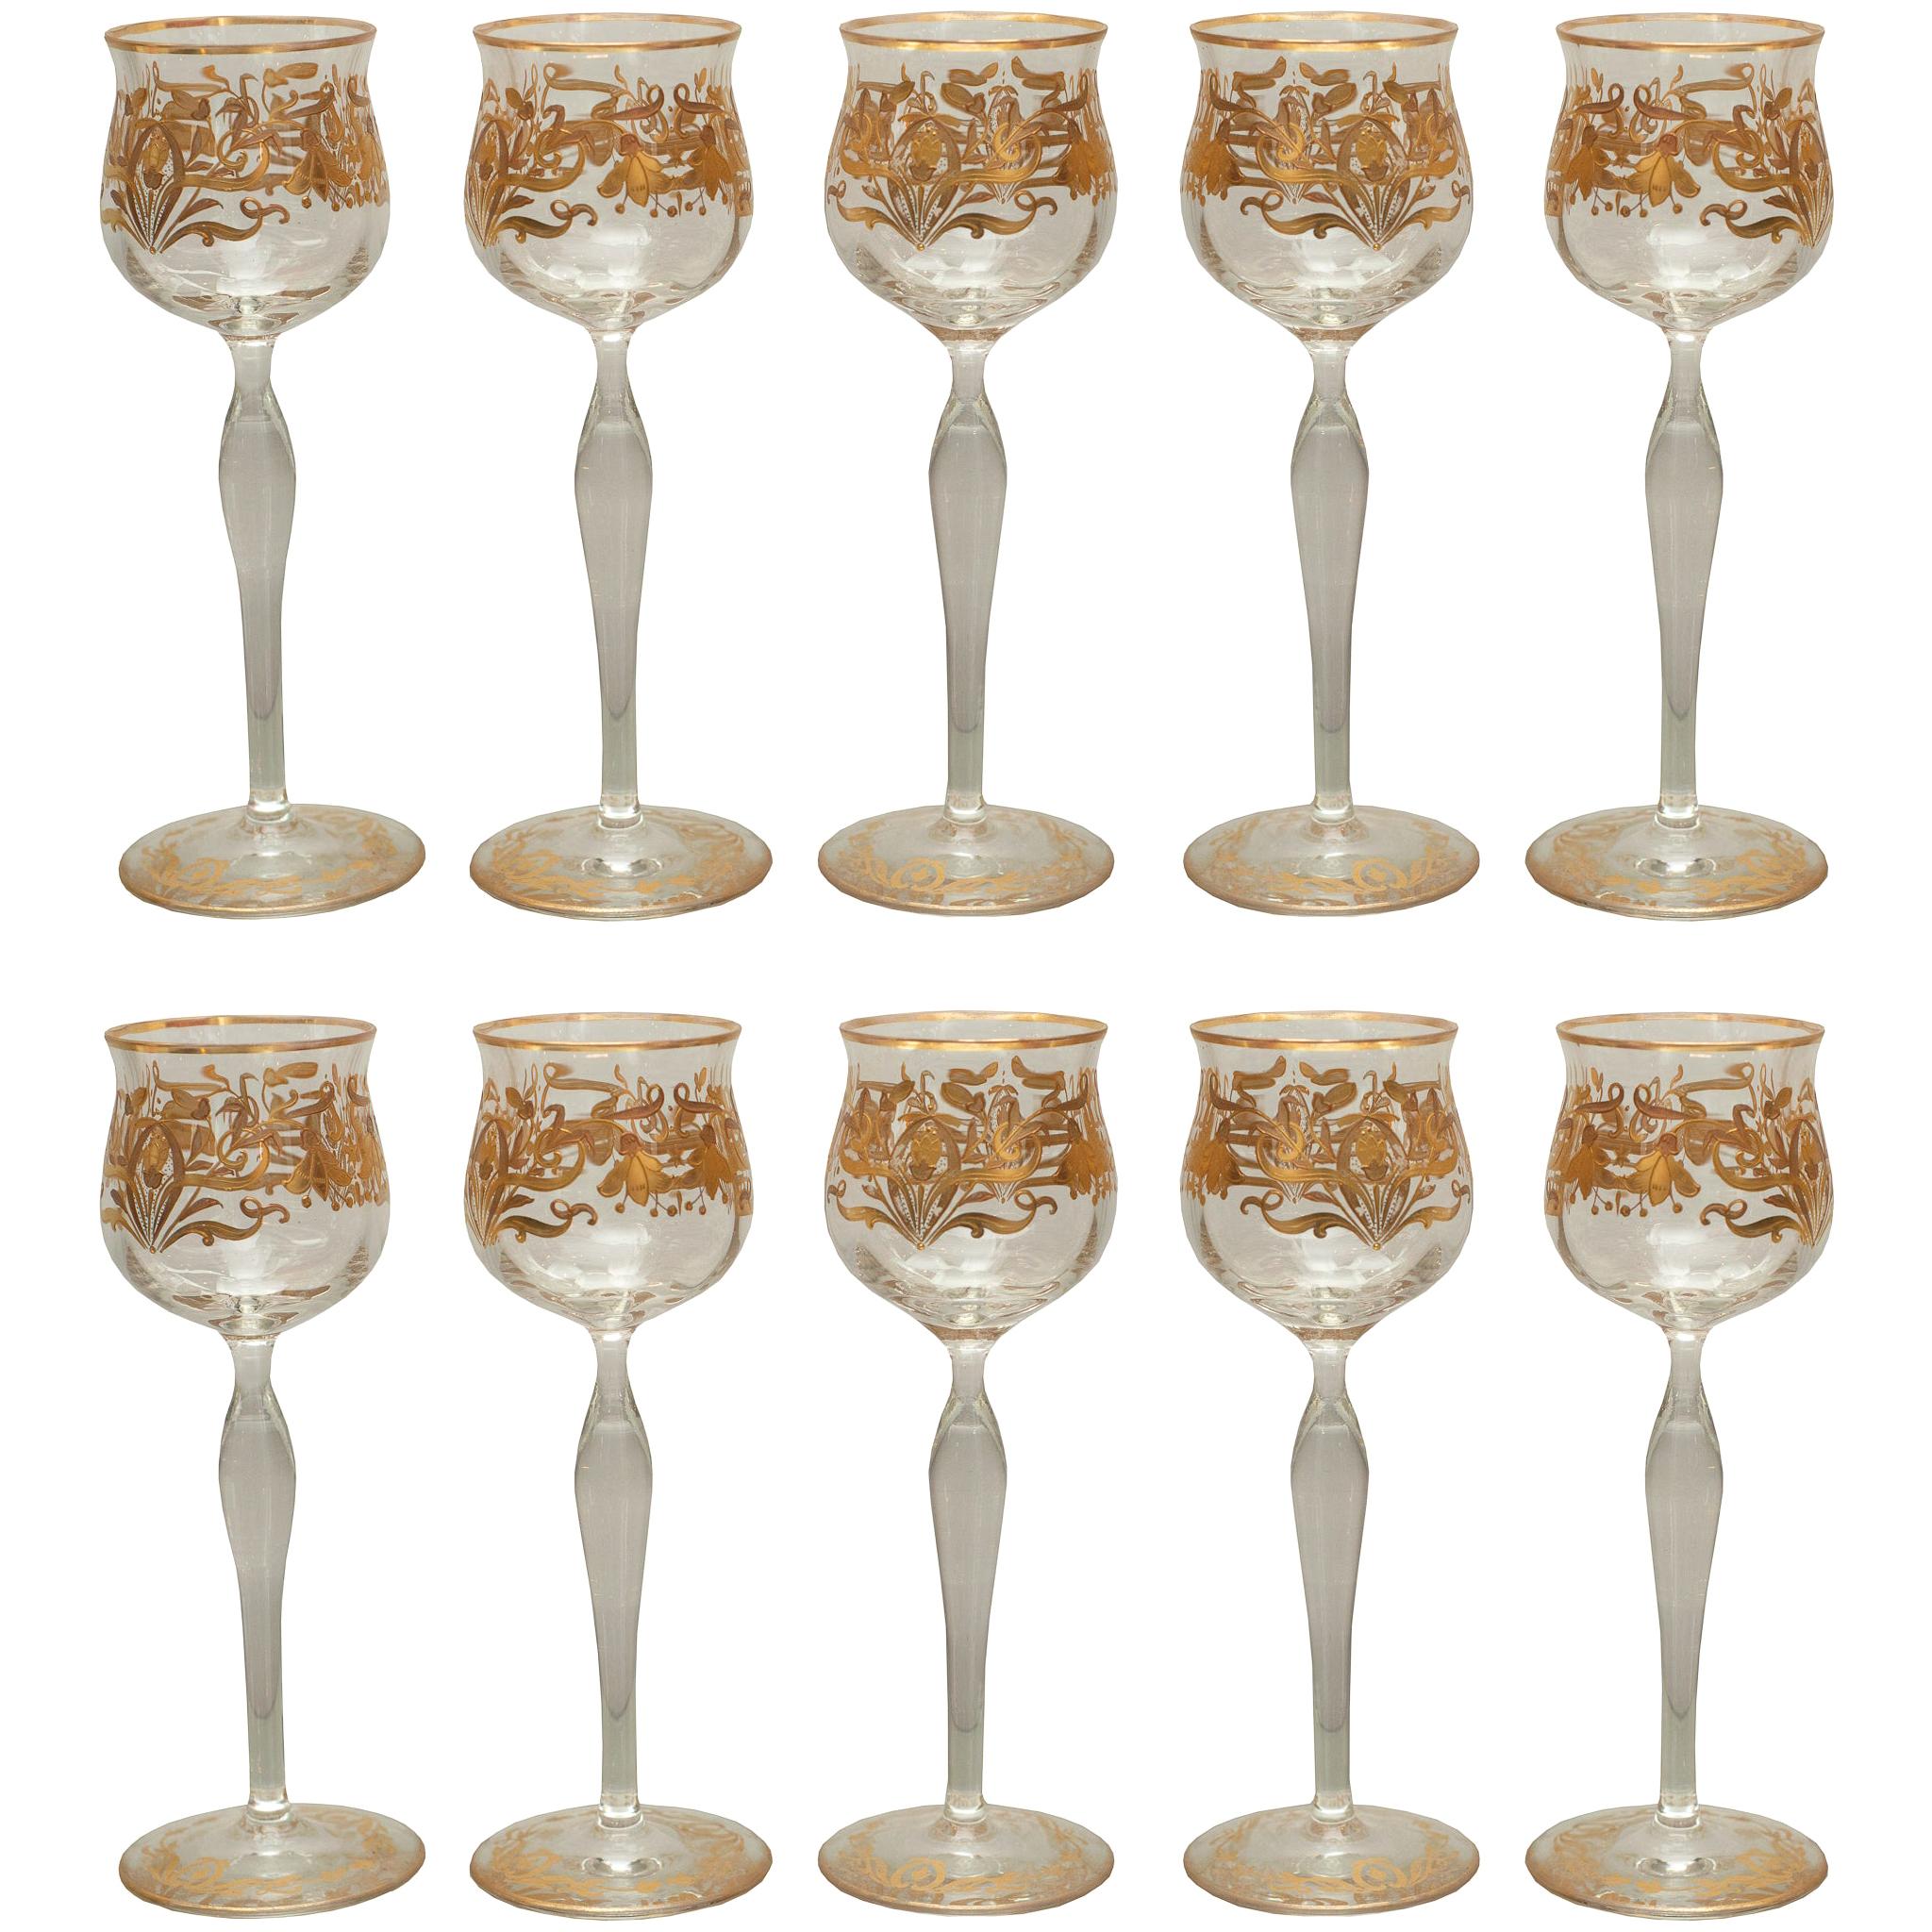 Set of 10 Antique Venetian Wine Glasses with Gilding